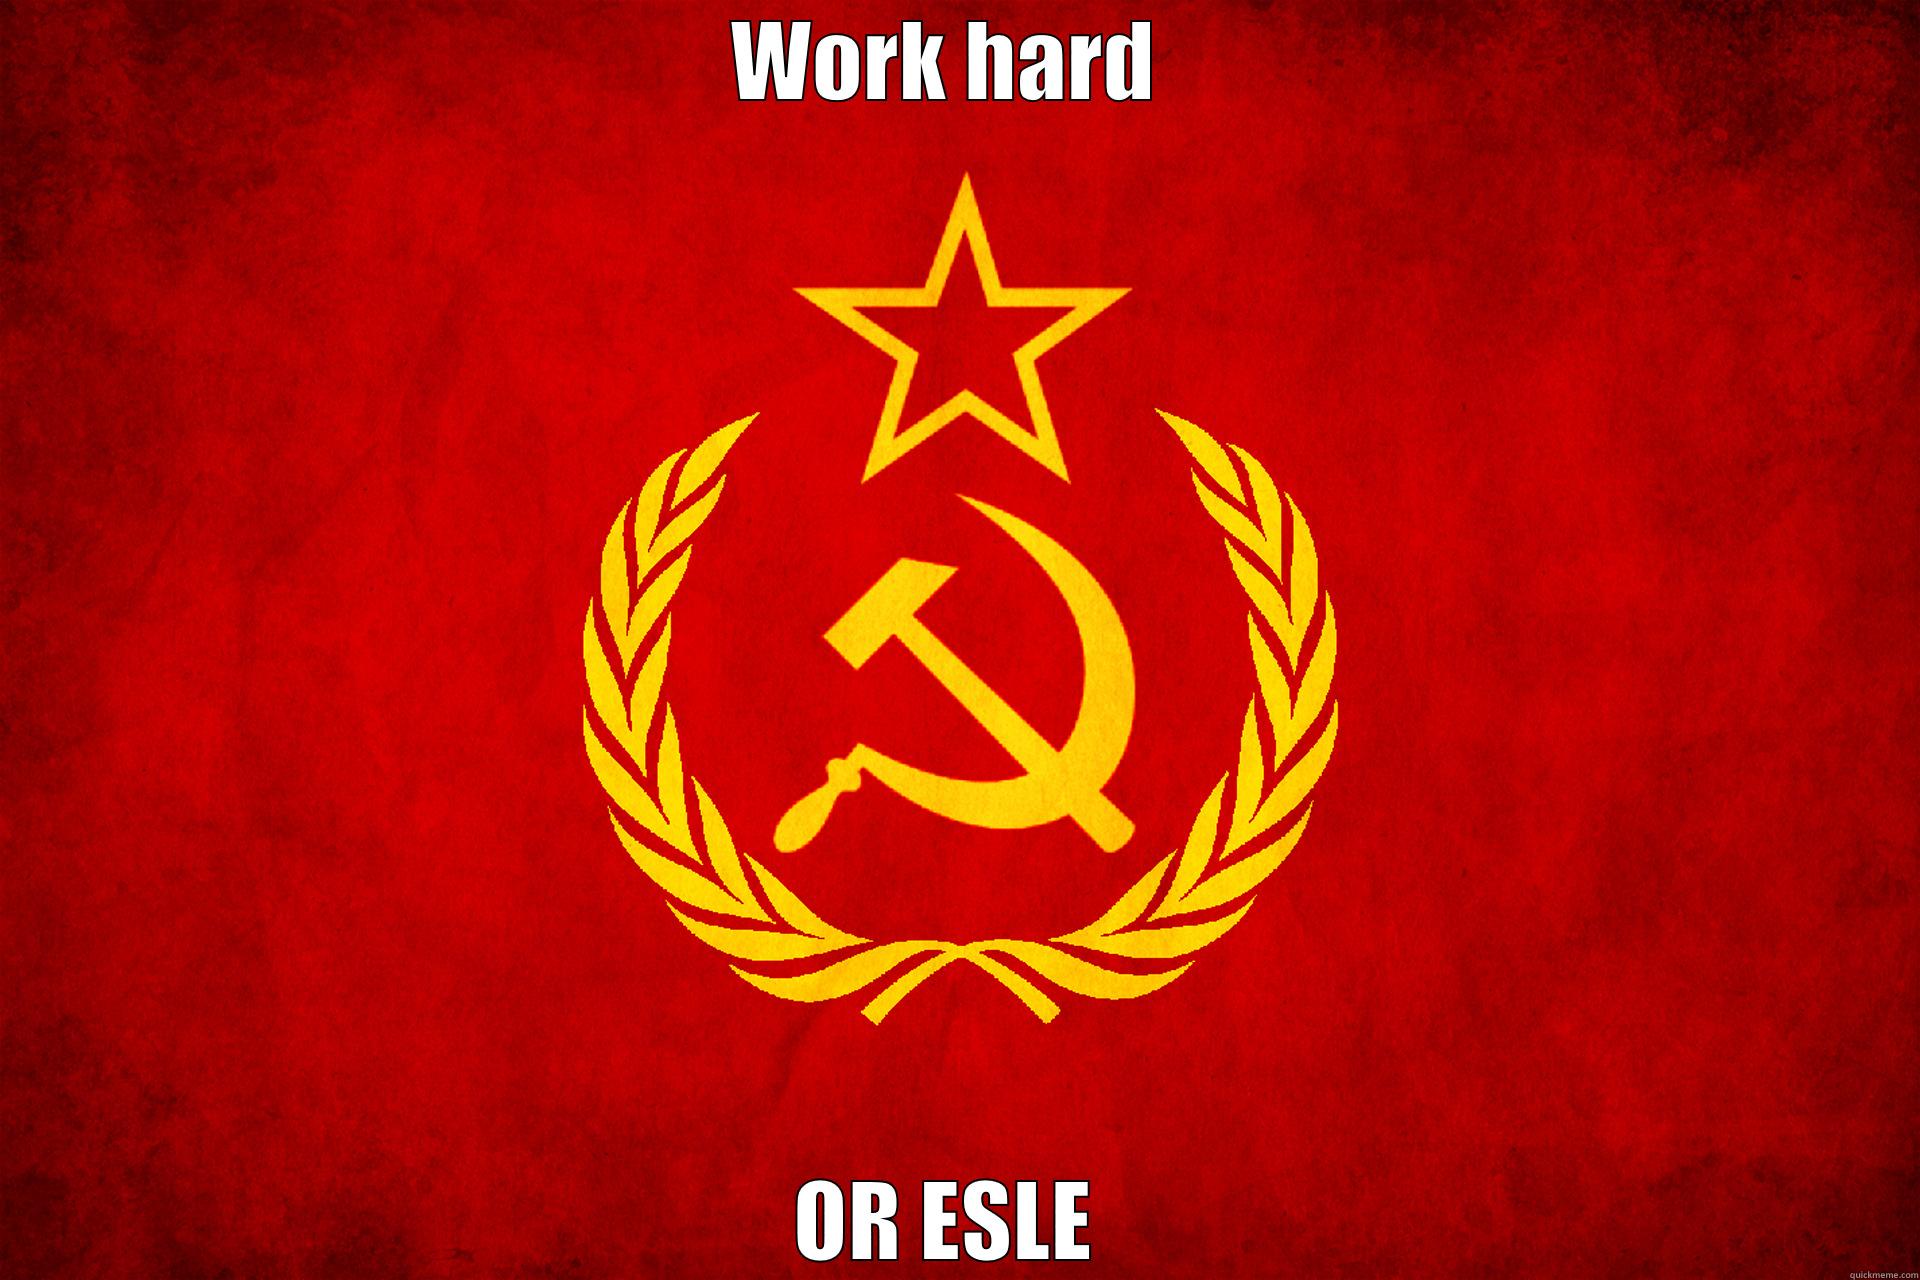 Communisim and work - WORK HARD  OR ESLE  Misc